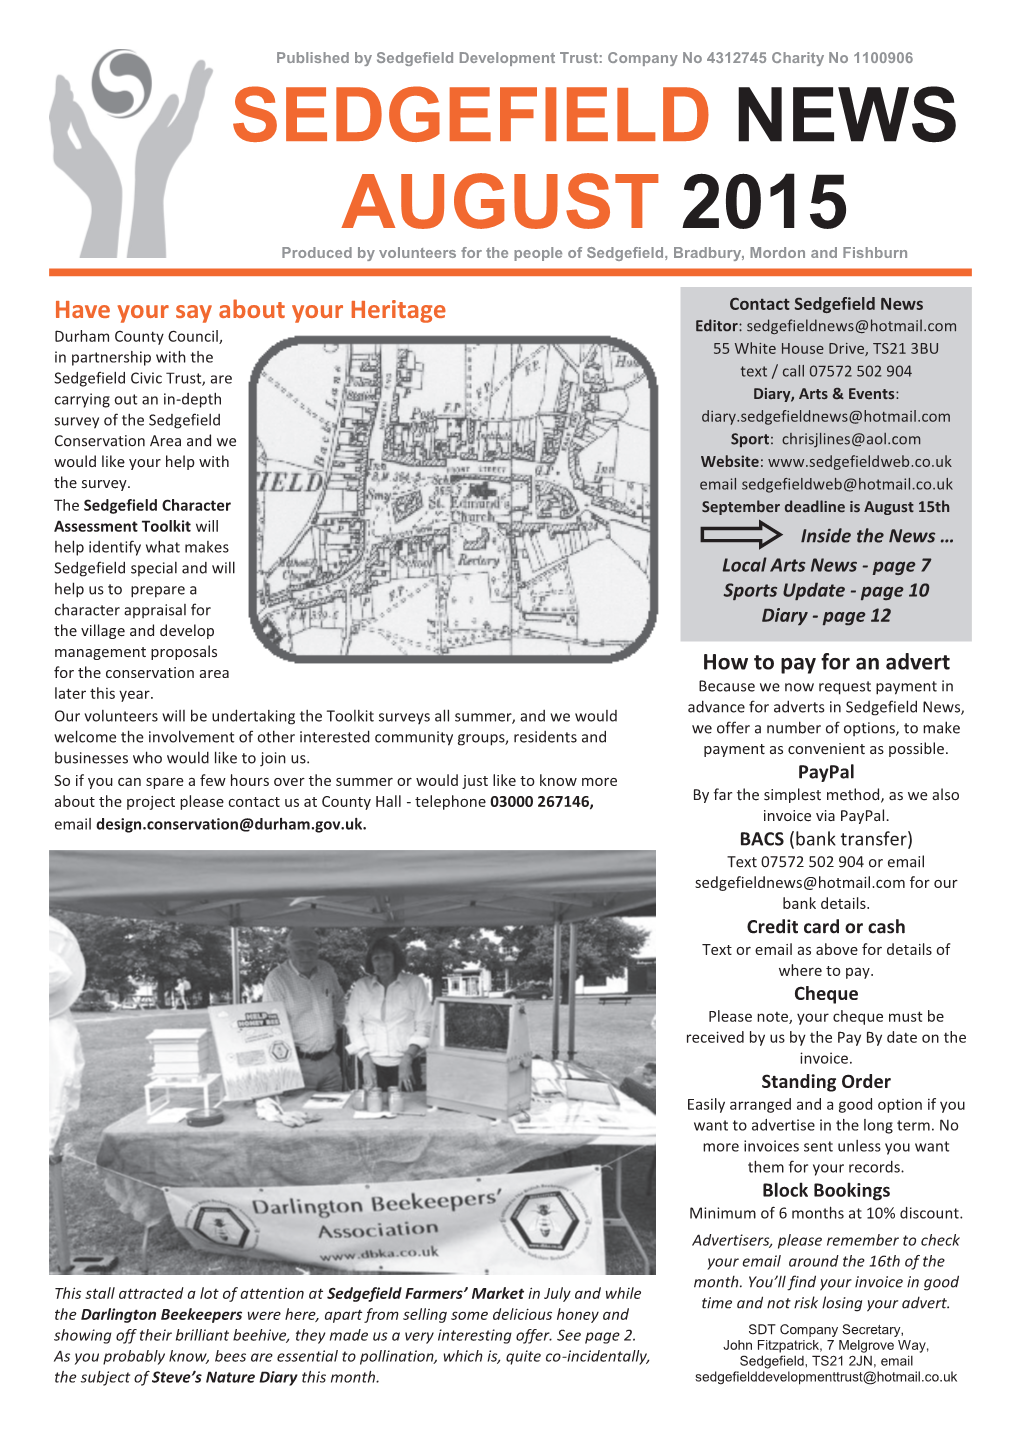 SEDGEFIELD NEWS AUGUST 2015 Produced by Volunteers for the People of Sedgefield, Bradbury, Mordon and Fishburn